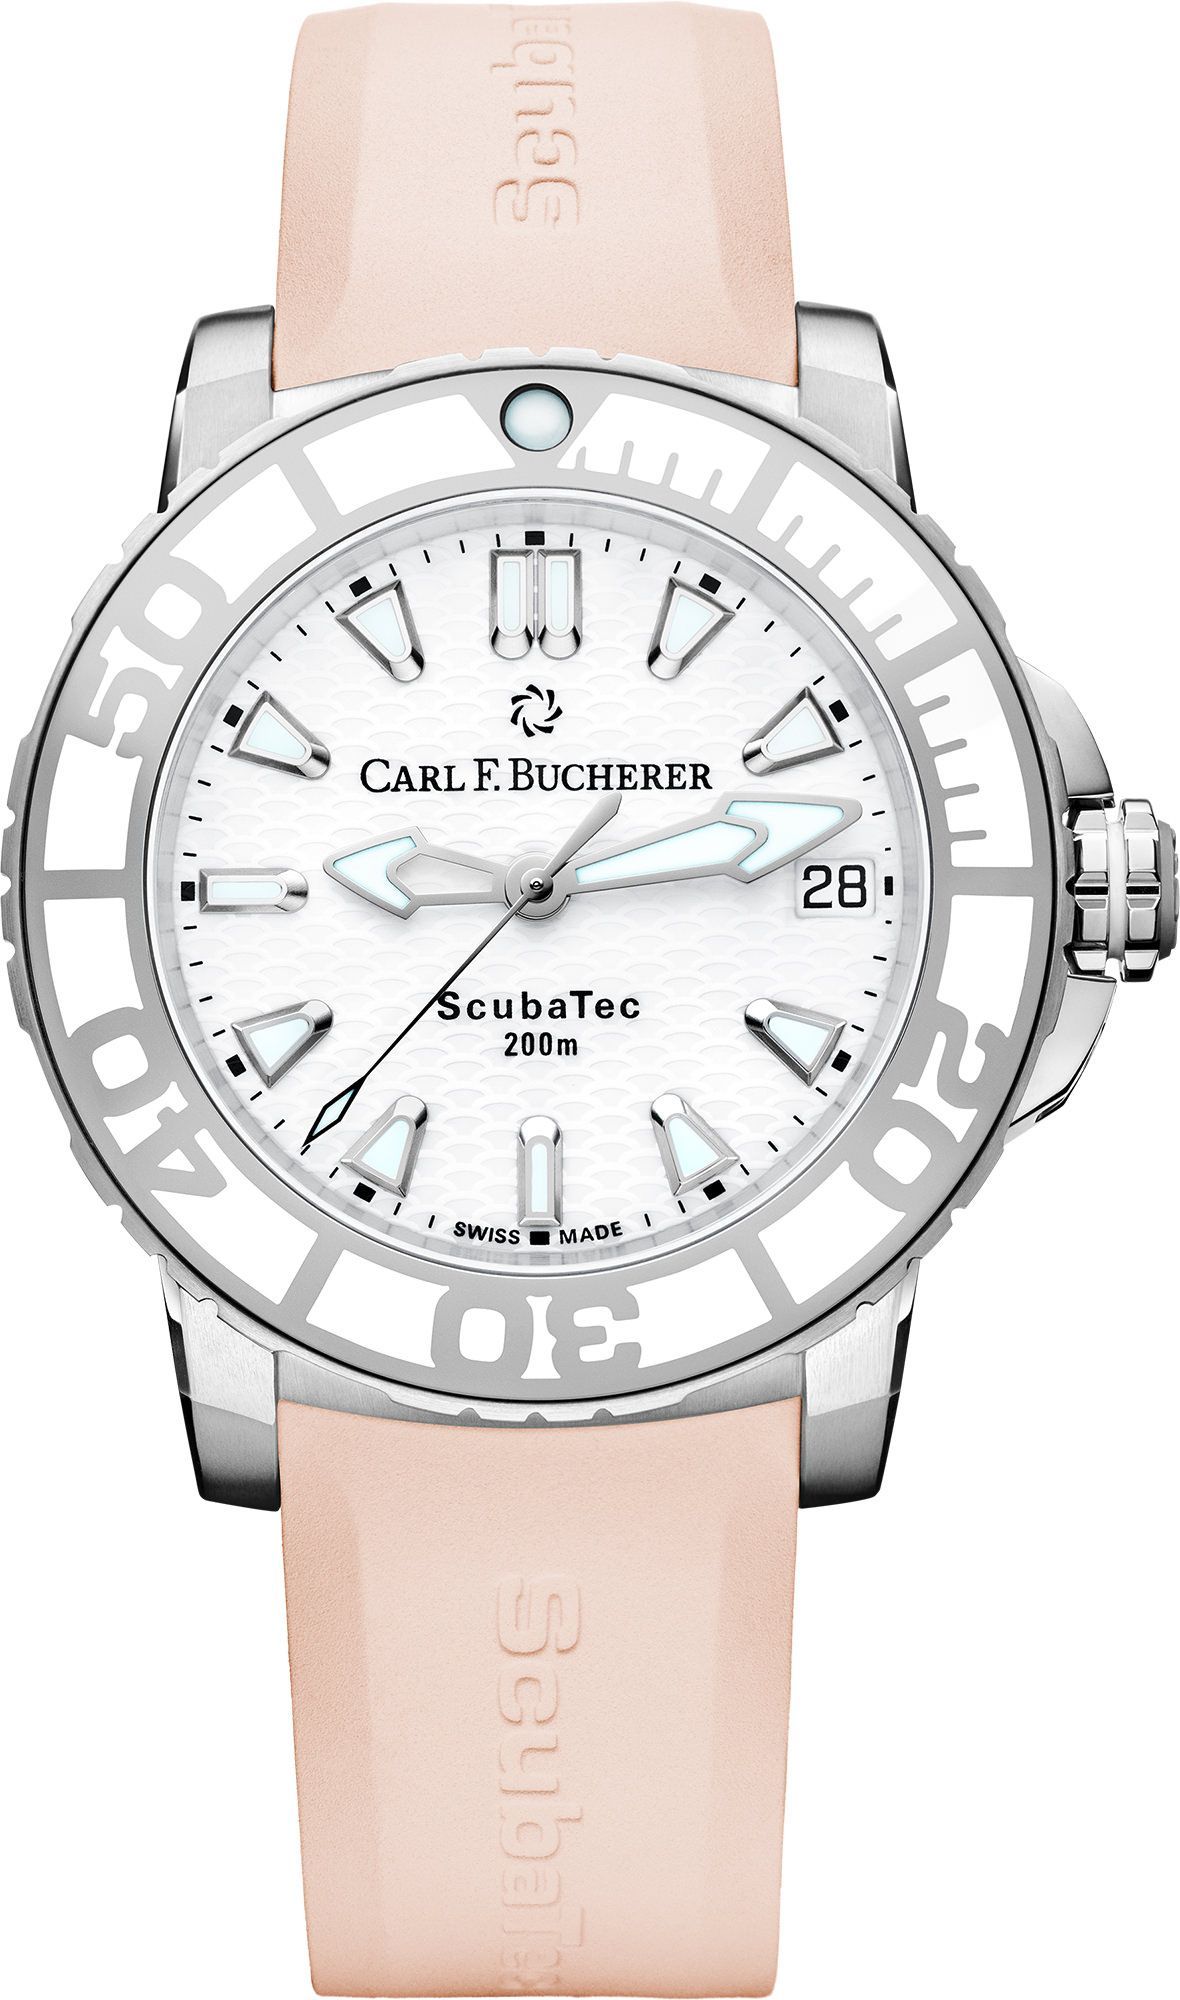 Carl F. Bucherer ScubaTec 36.5 mm Watch in White Dial For Women - 1